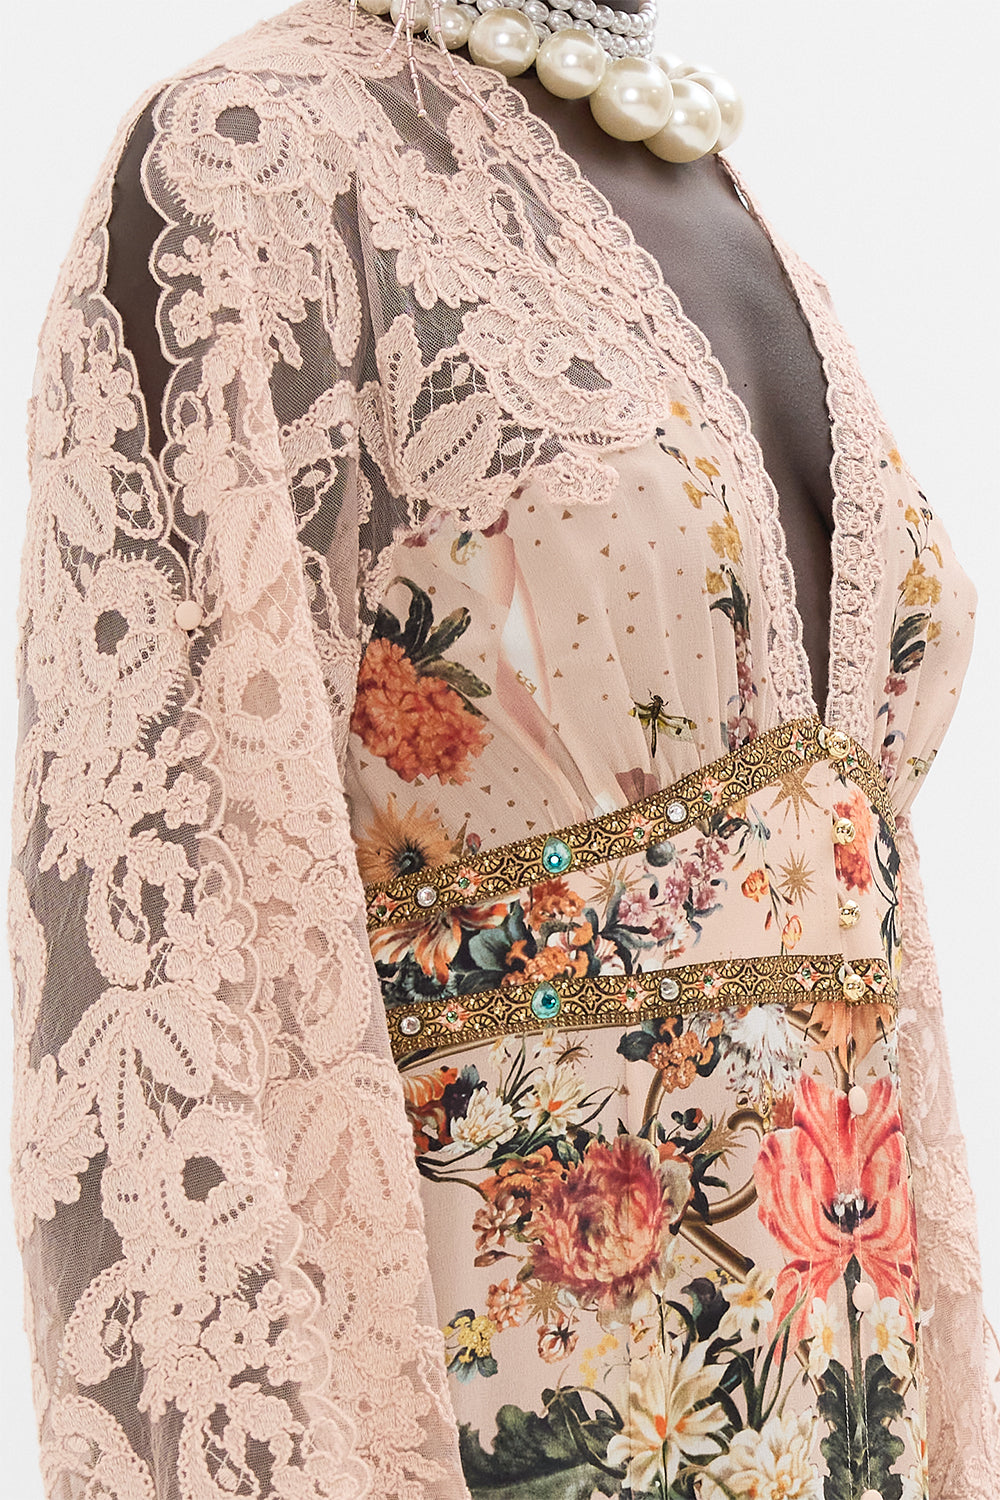 CAMILLA floral print lace dress In Rose Garden Revolution print